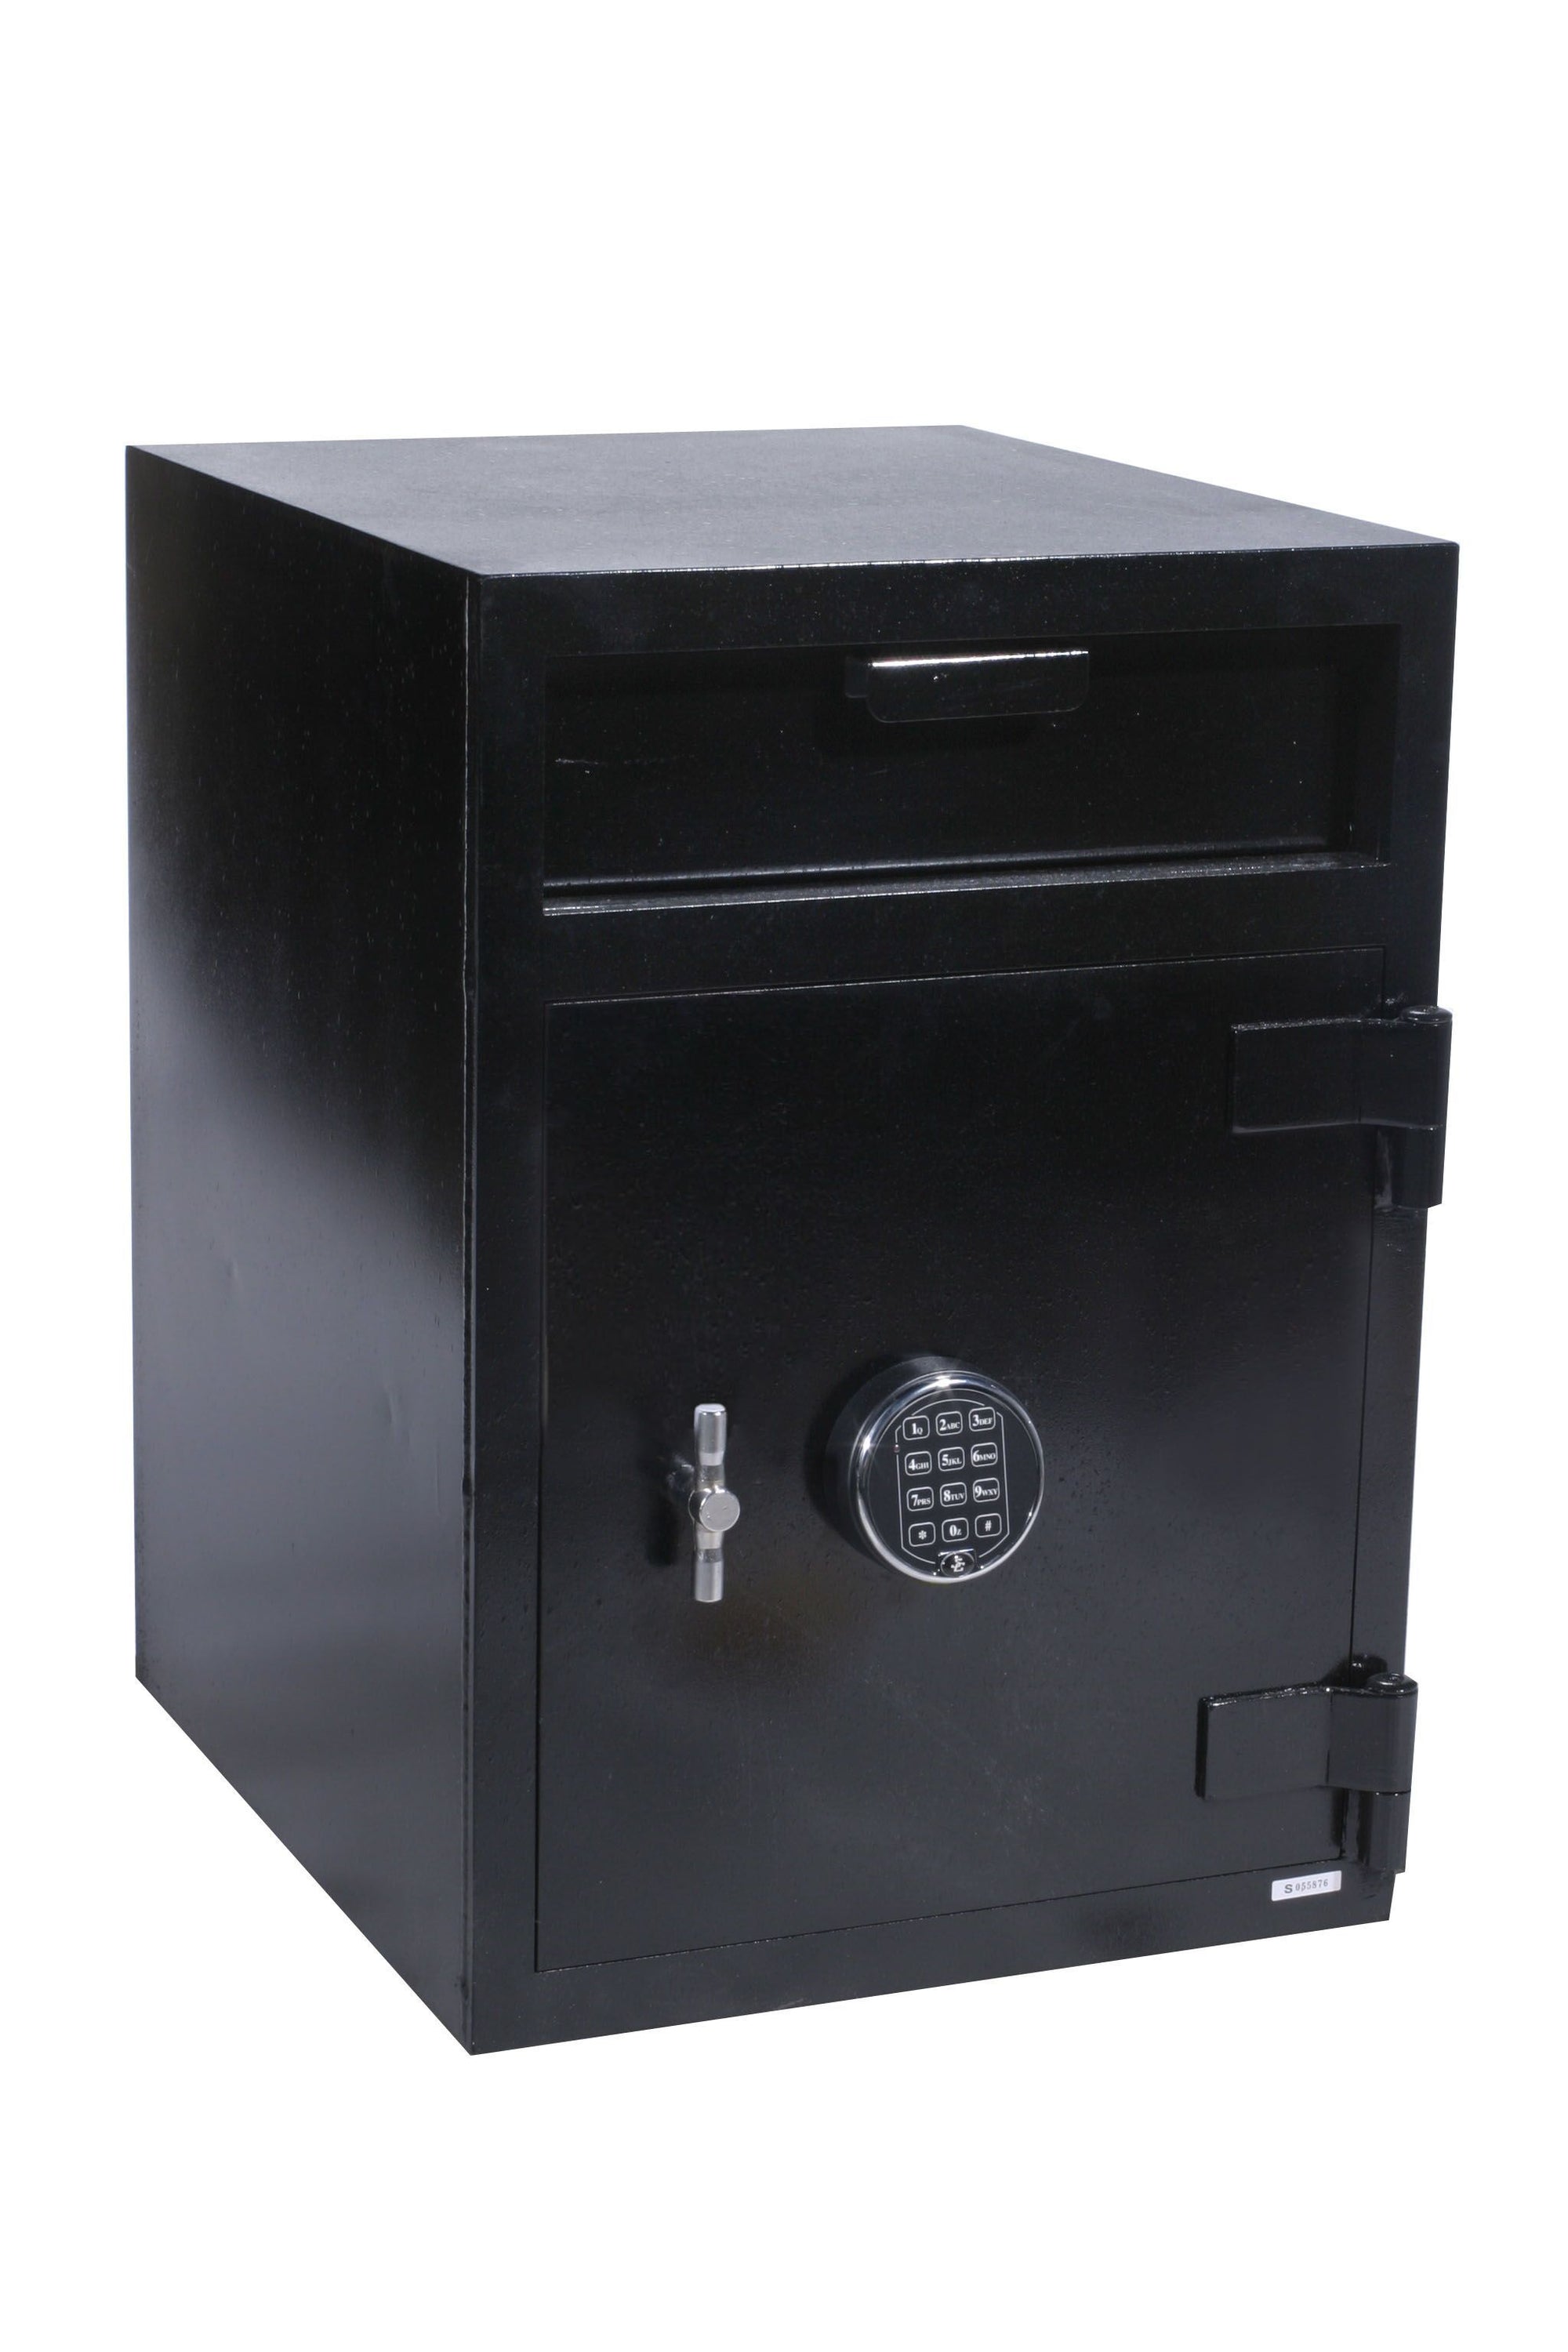 Cennox MB2720ICH-FK1 Depository Safe with Internal Locker